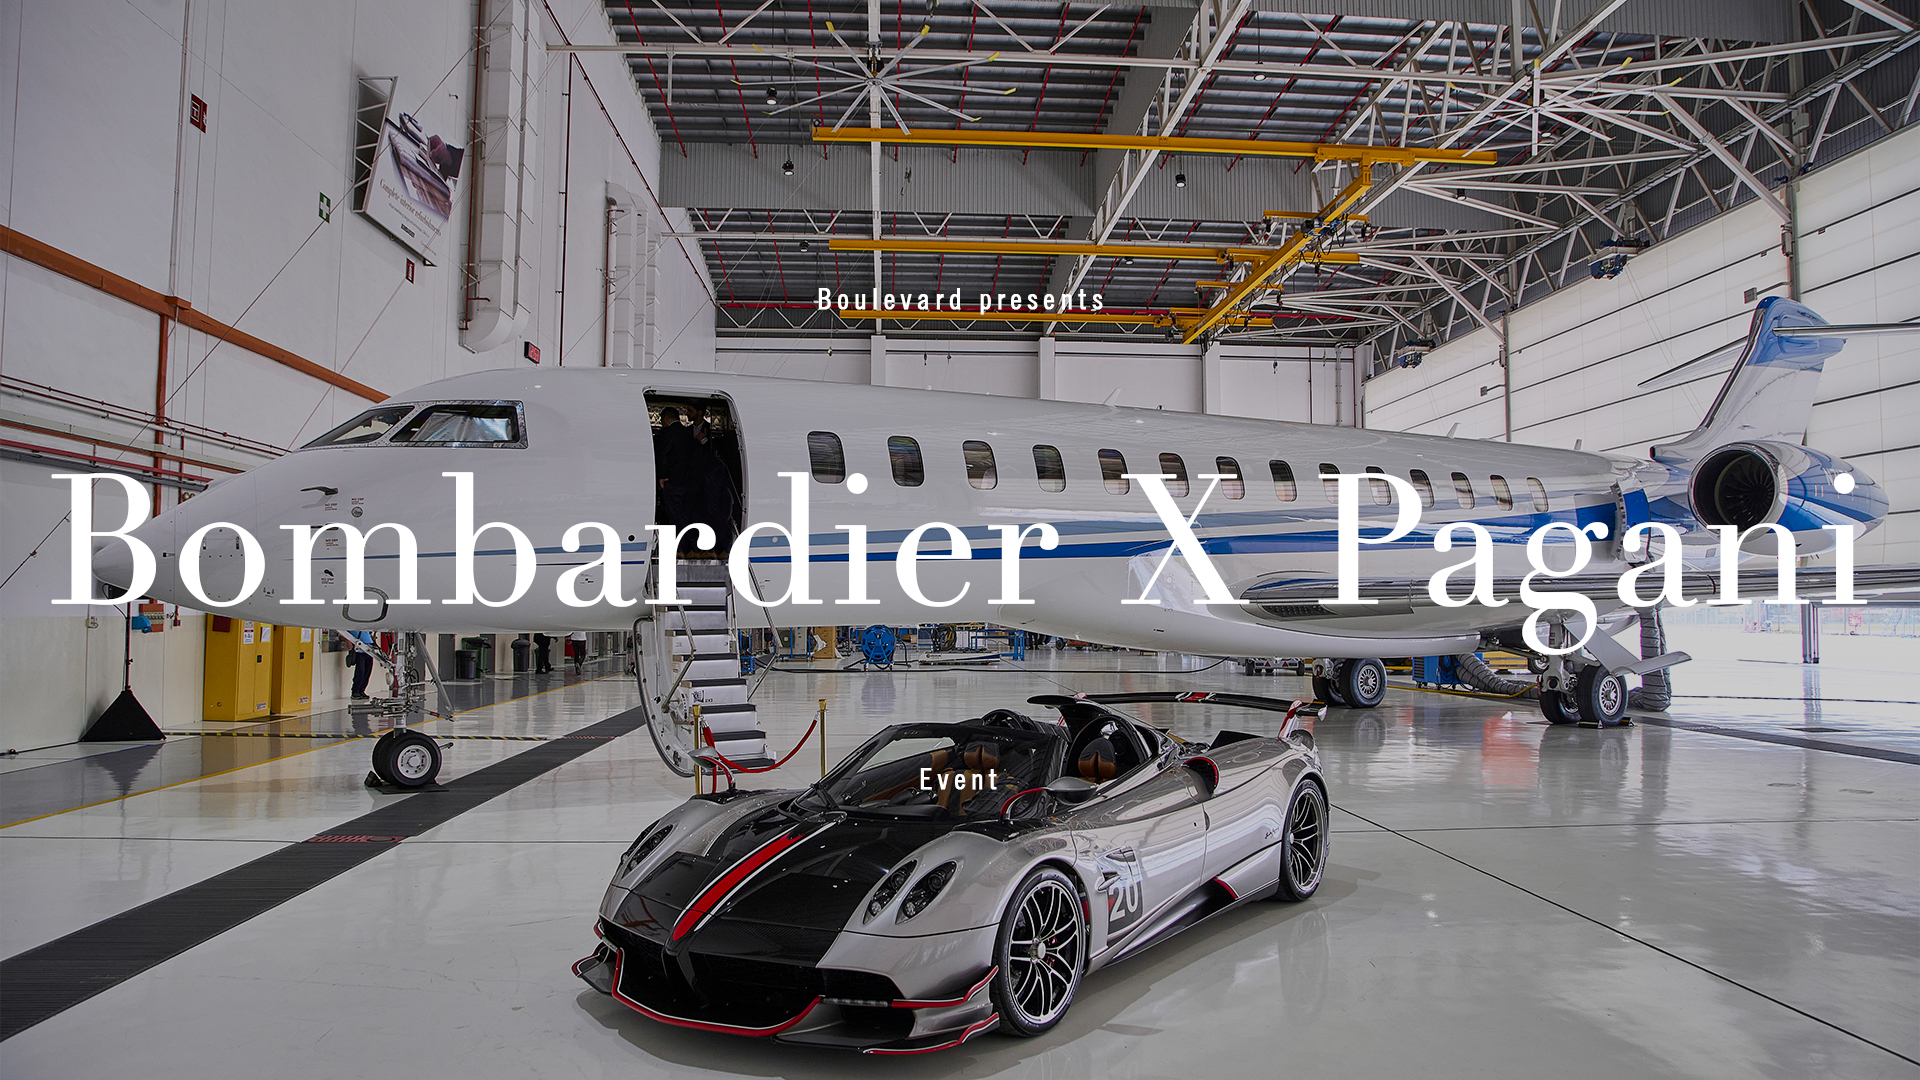 Bombardier X Pagani video